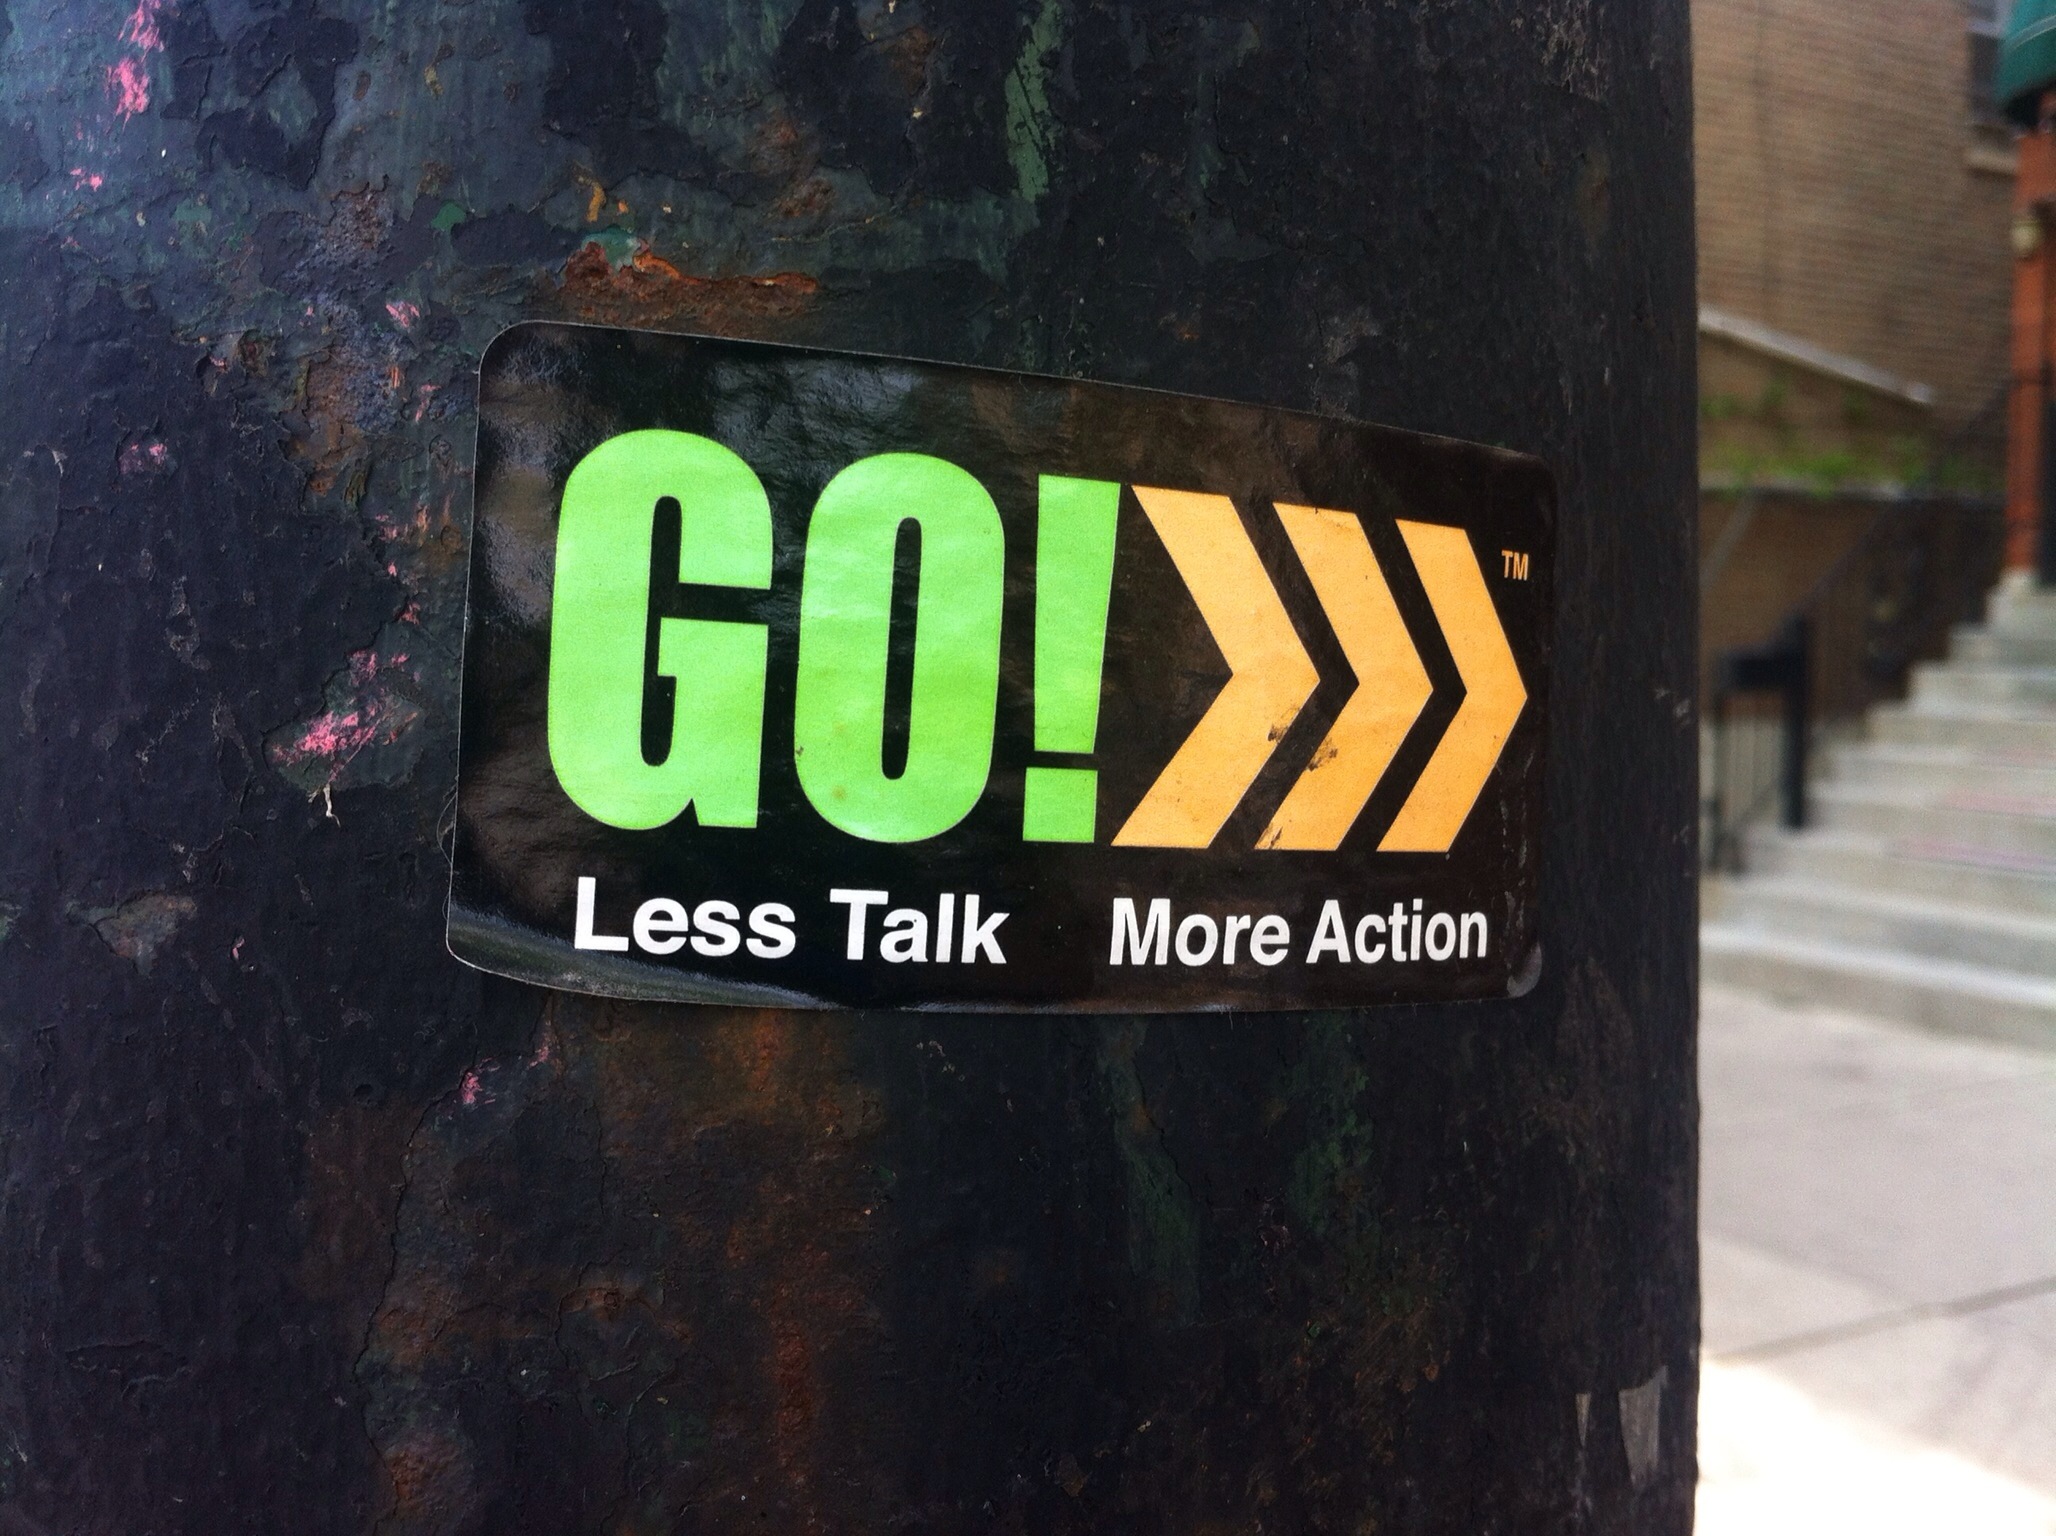 Less talk more Action. Talk less do more. Less talk more